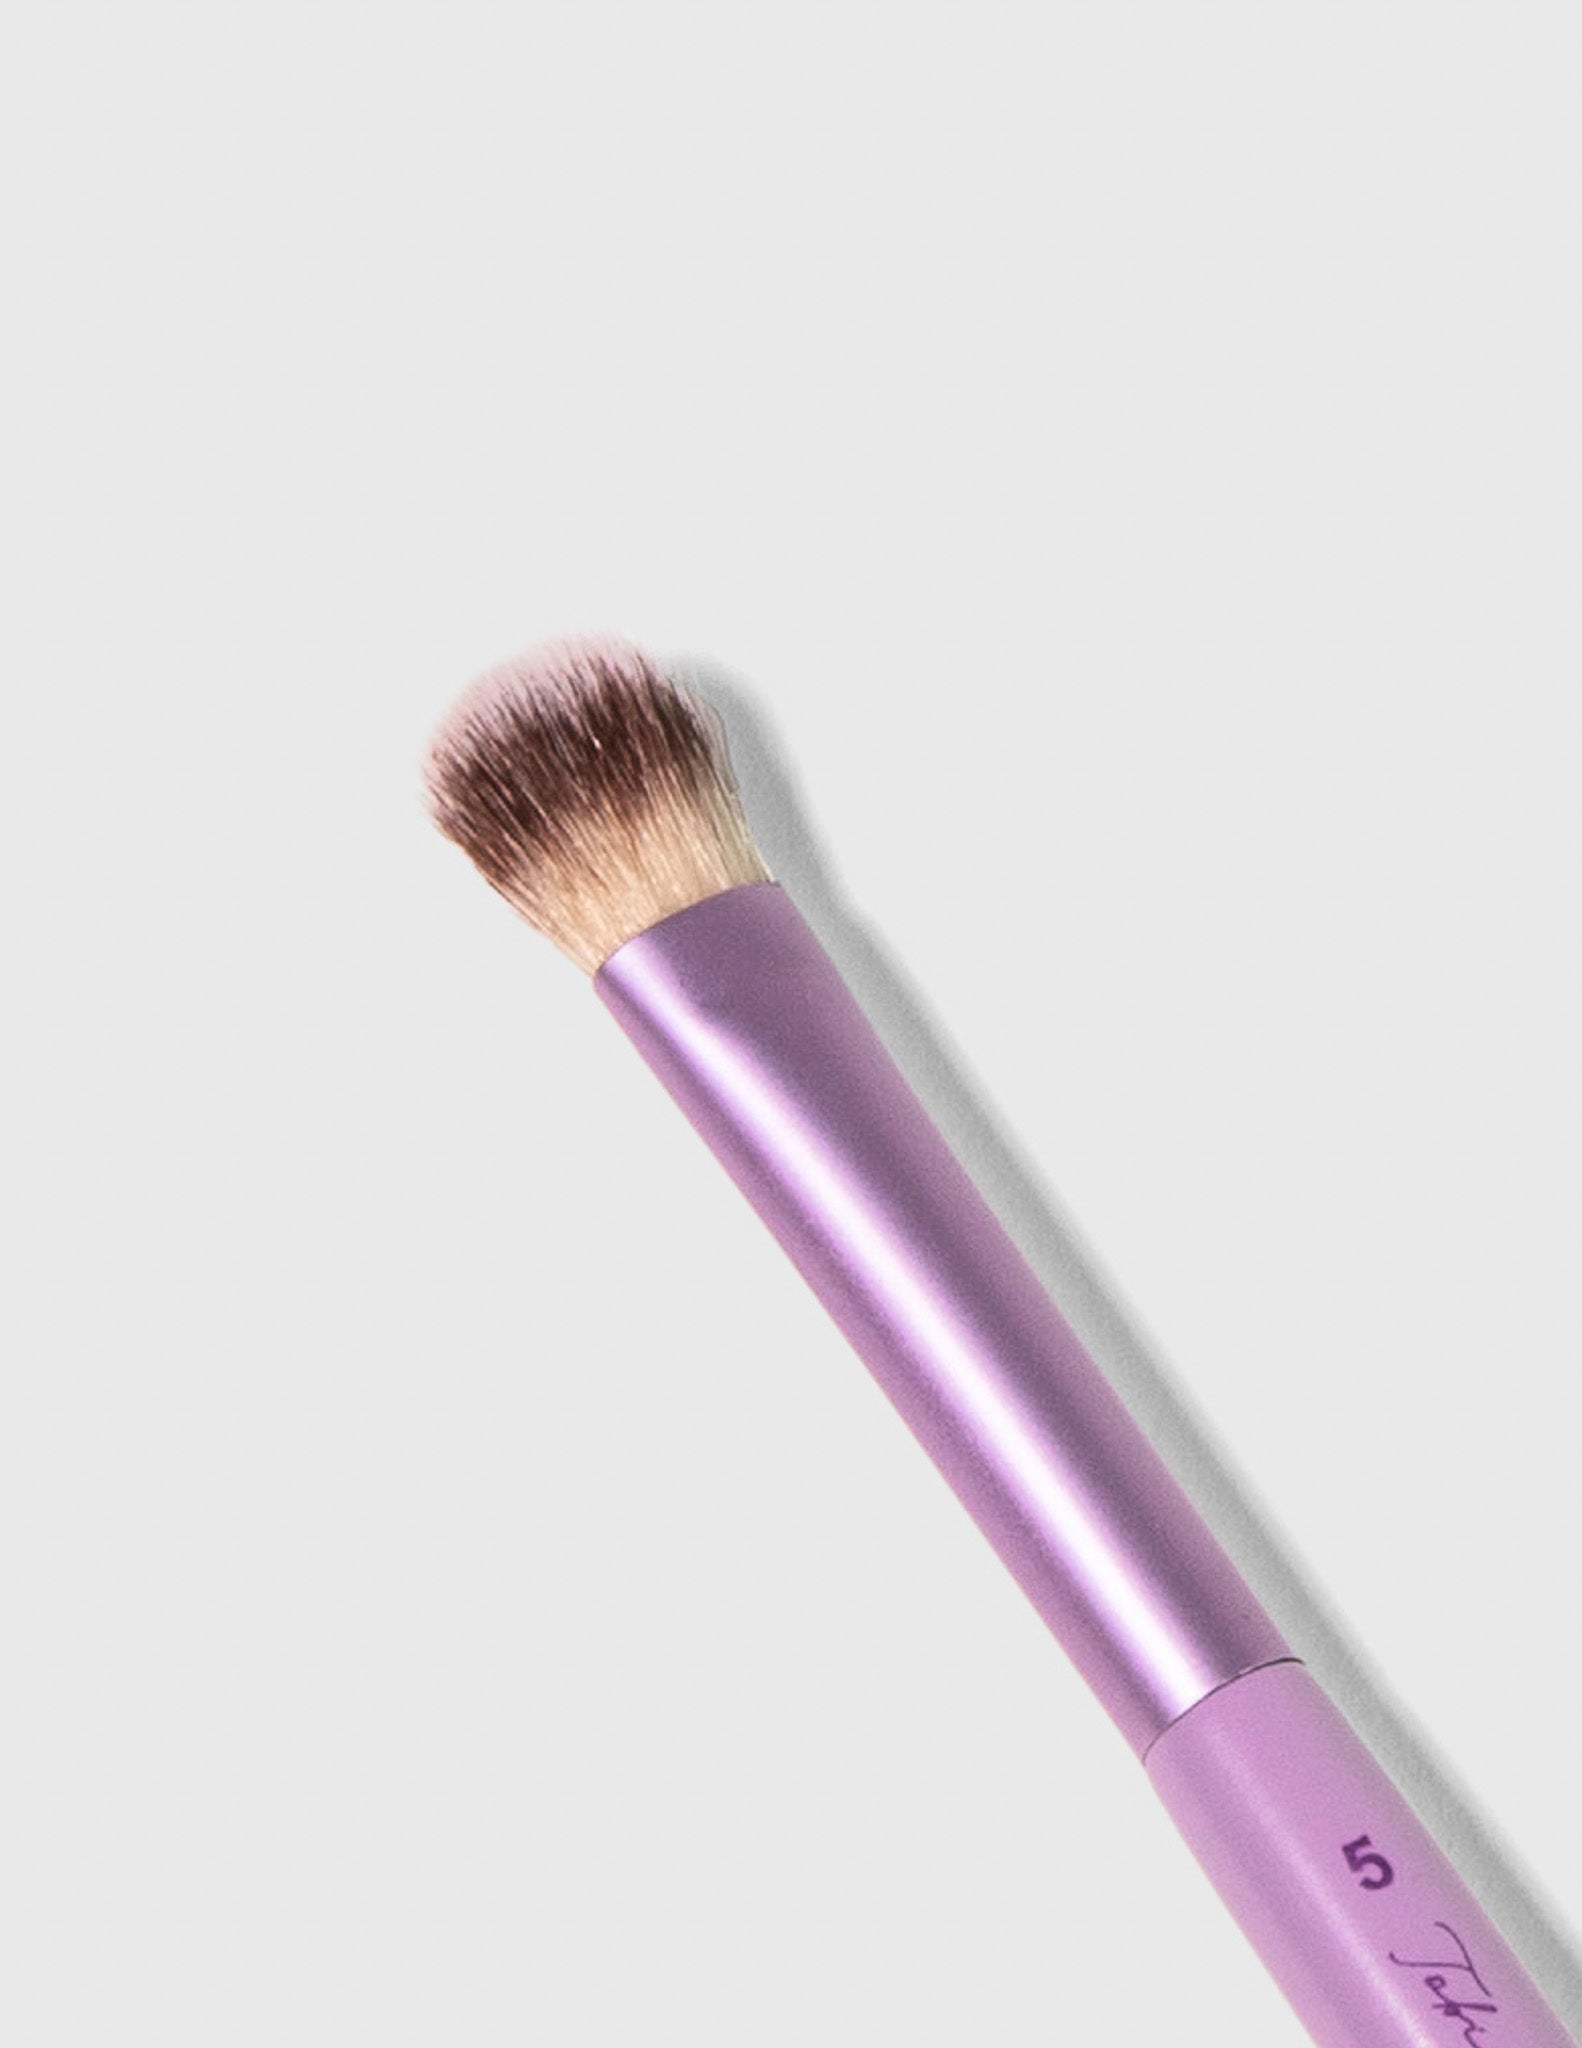 Small Powder Makeup Brush - #5 - Trademark Beauty